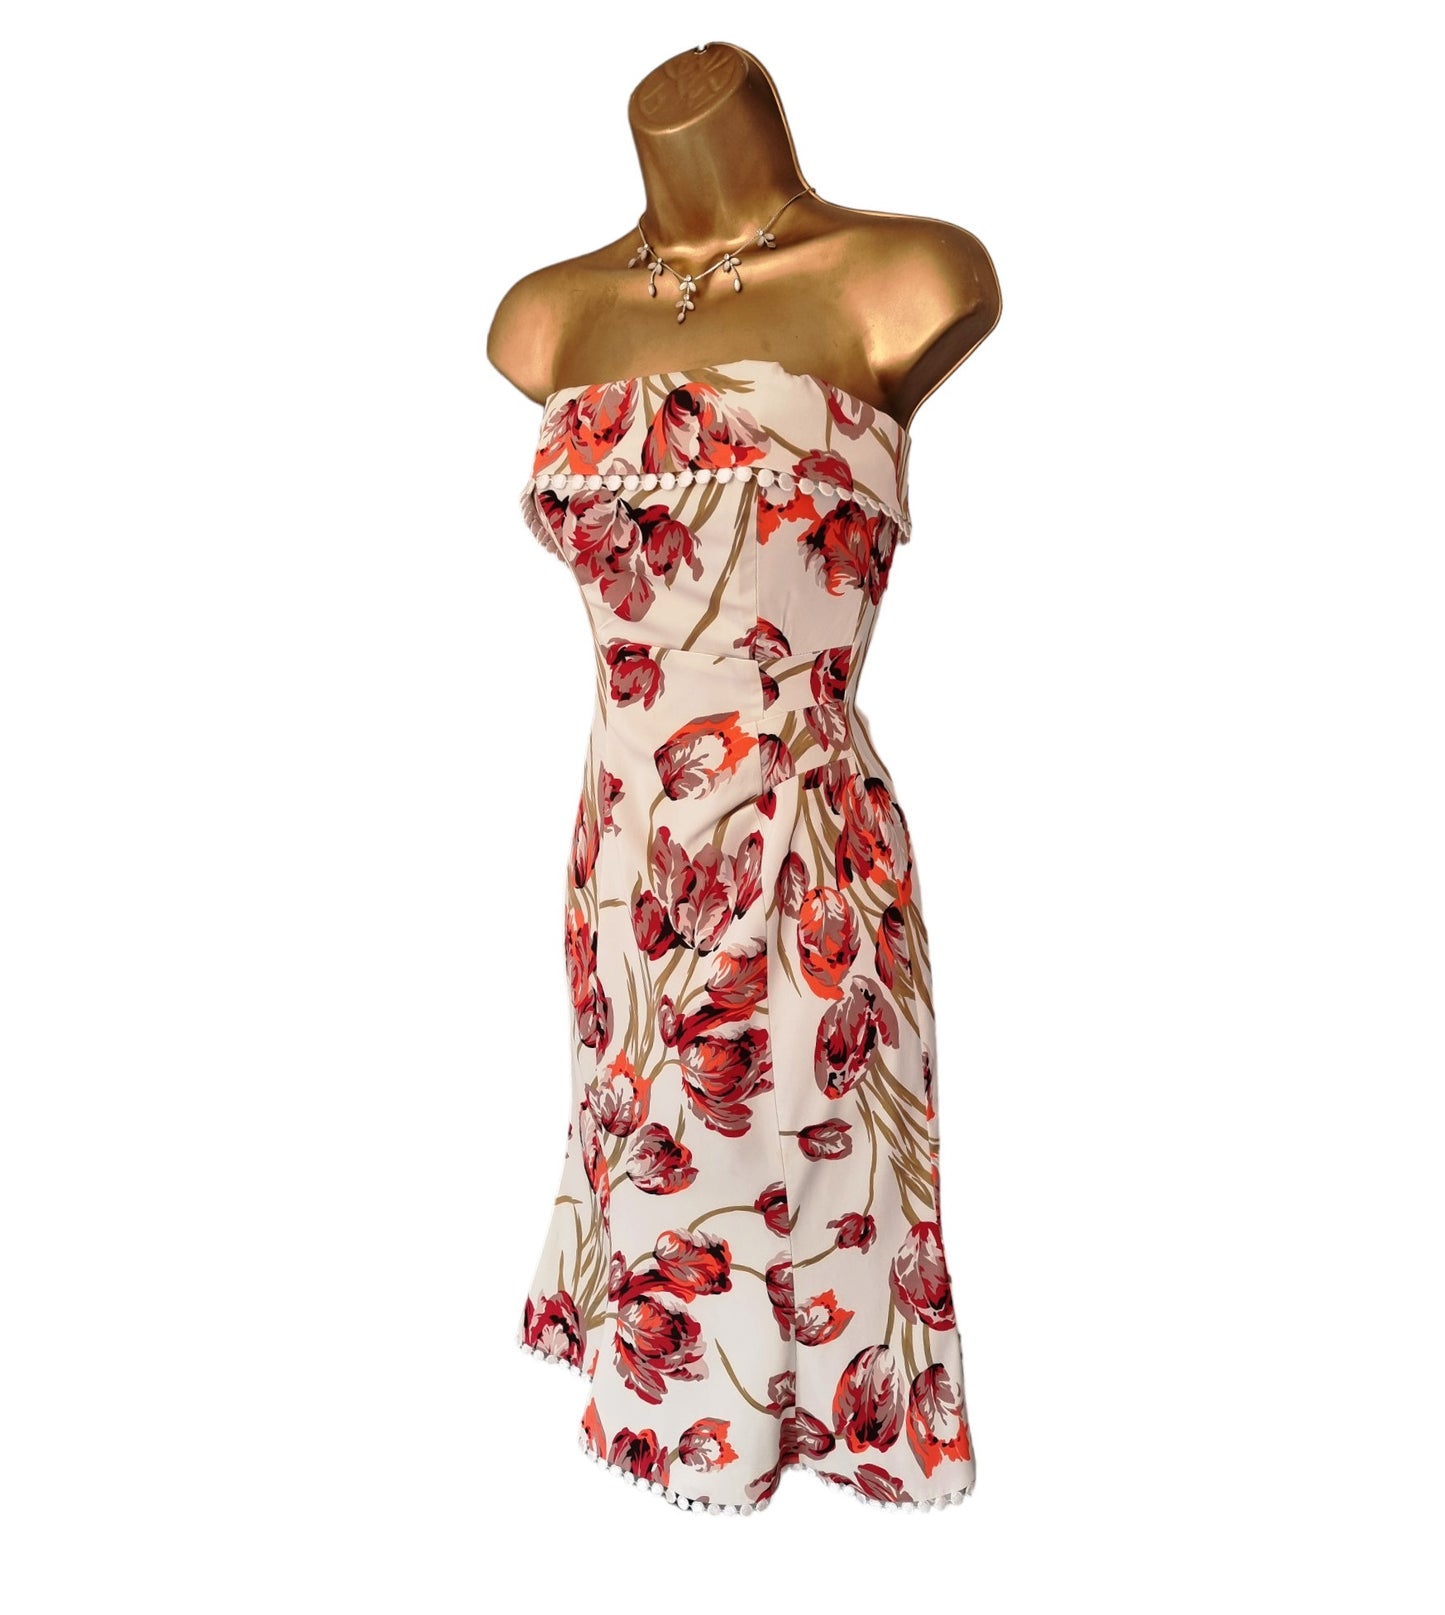 Karen Millen Vintage Ivory Coral Tulip Print Chelsy Corset Dress UK 8 US 4 EU 36 Timeless Fashions